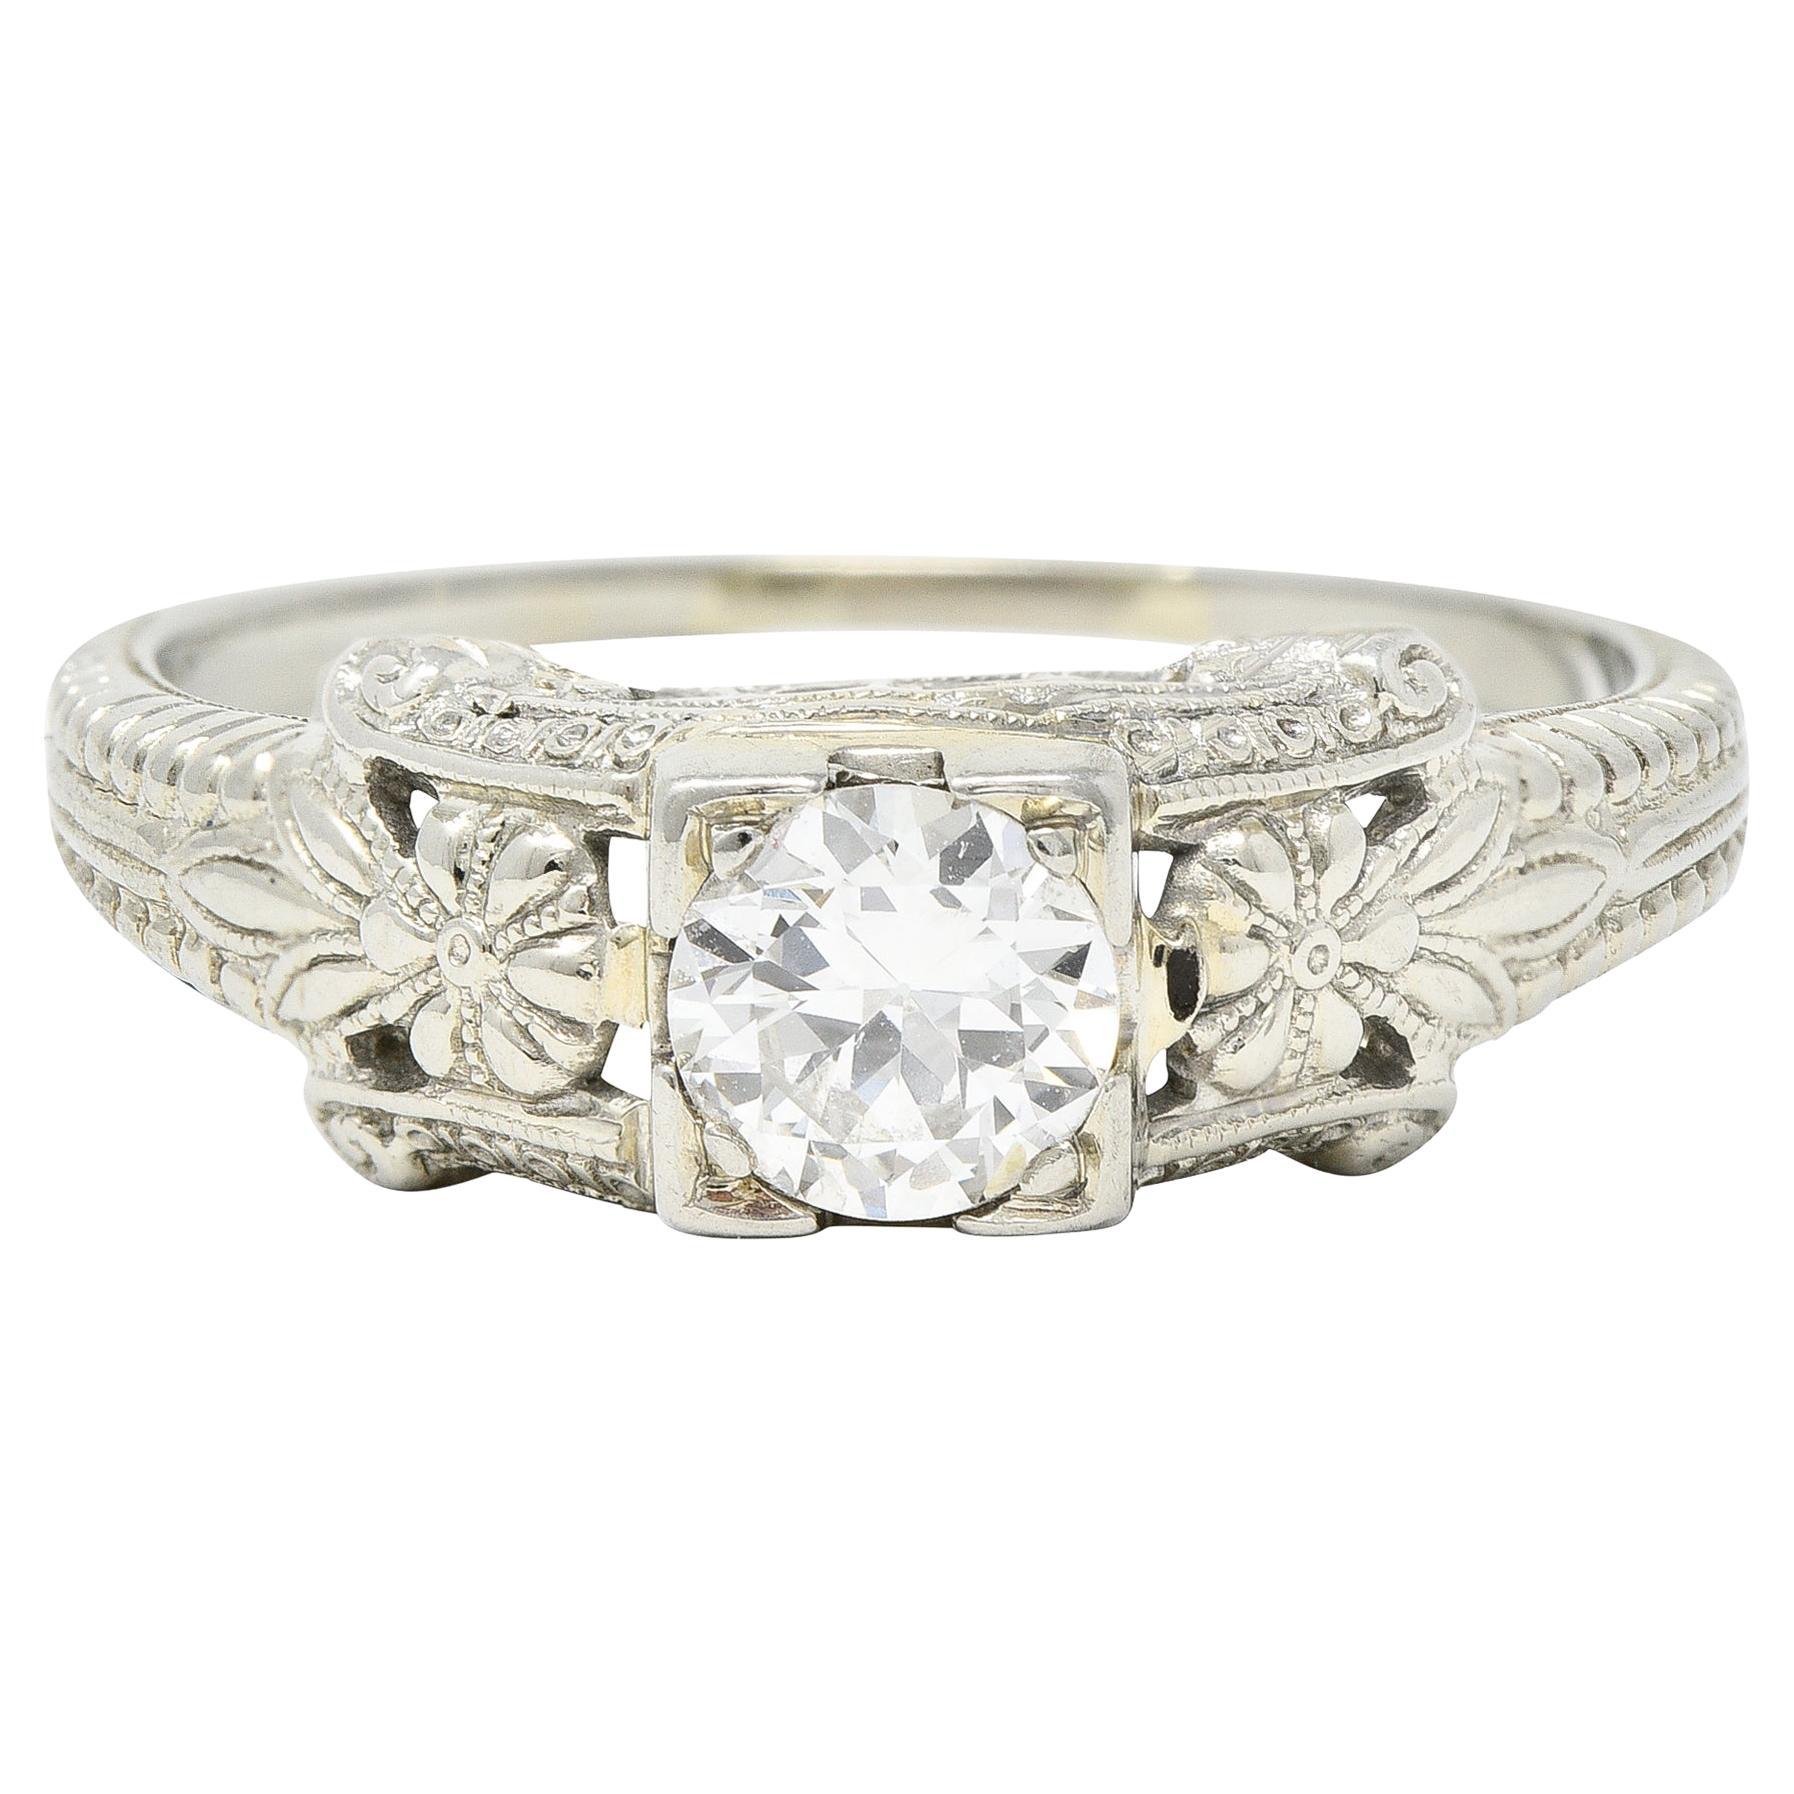 Art Deco 0.45 CTW Old European Cut Diamond 18 Karat White Gold Engagement Ring